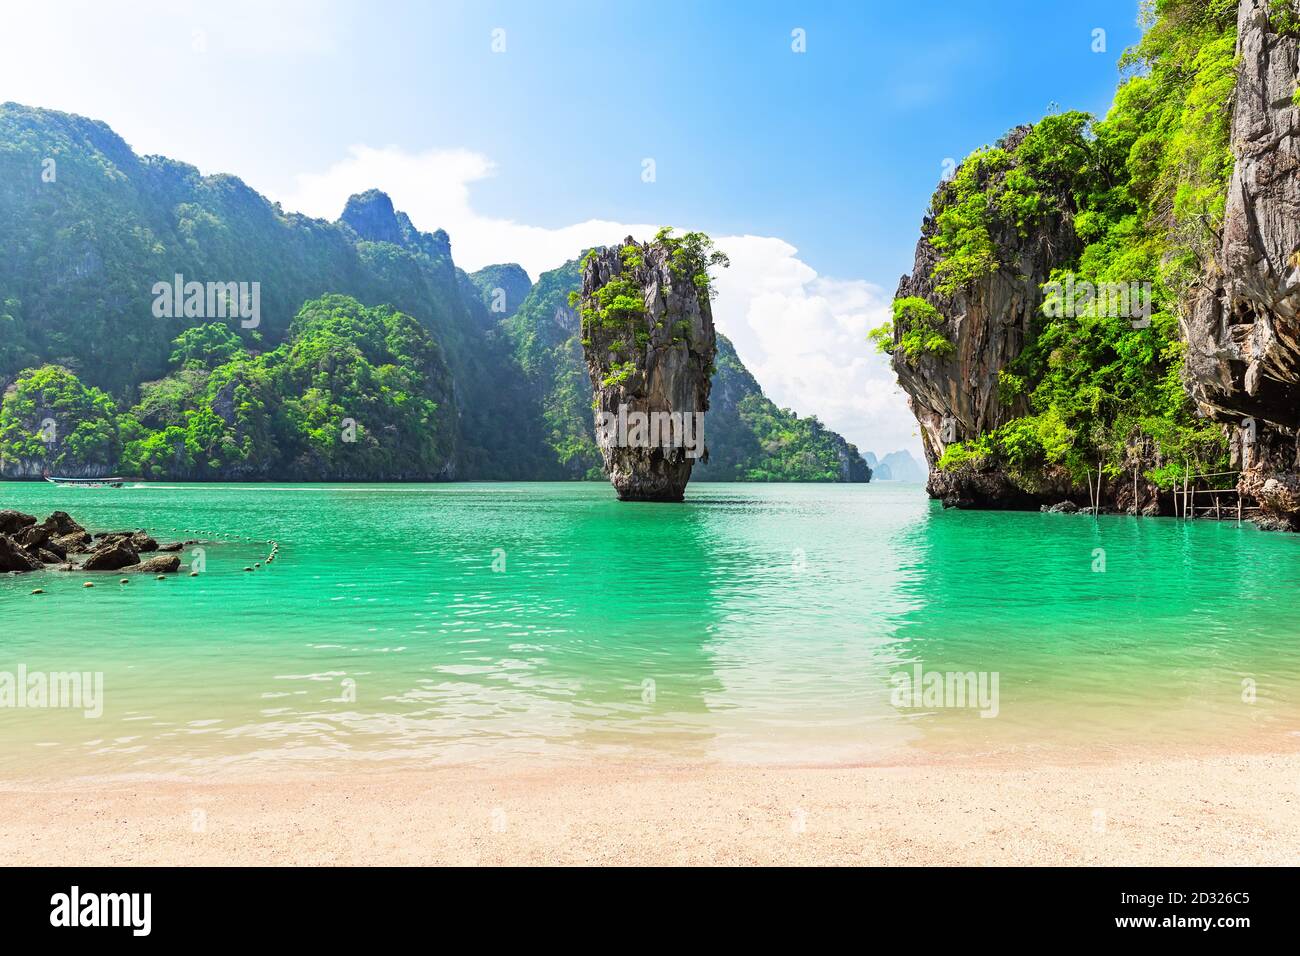 Famosa isla James Bond cerca de Phuket en Tailandia. Foto de viaje de la isla James Bond en la bahía Phang Nga, Tailandia. Foto de stock